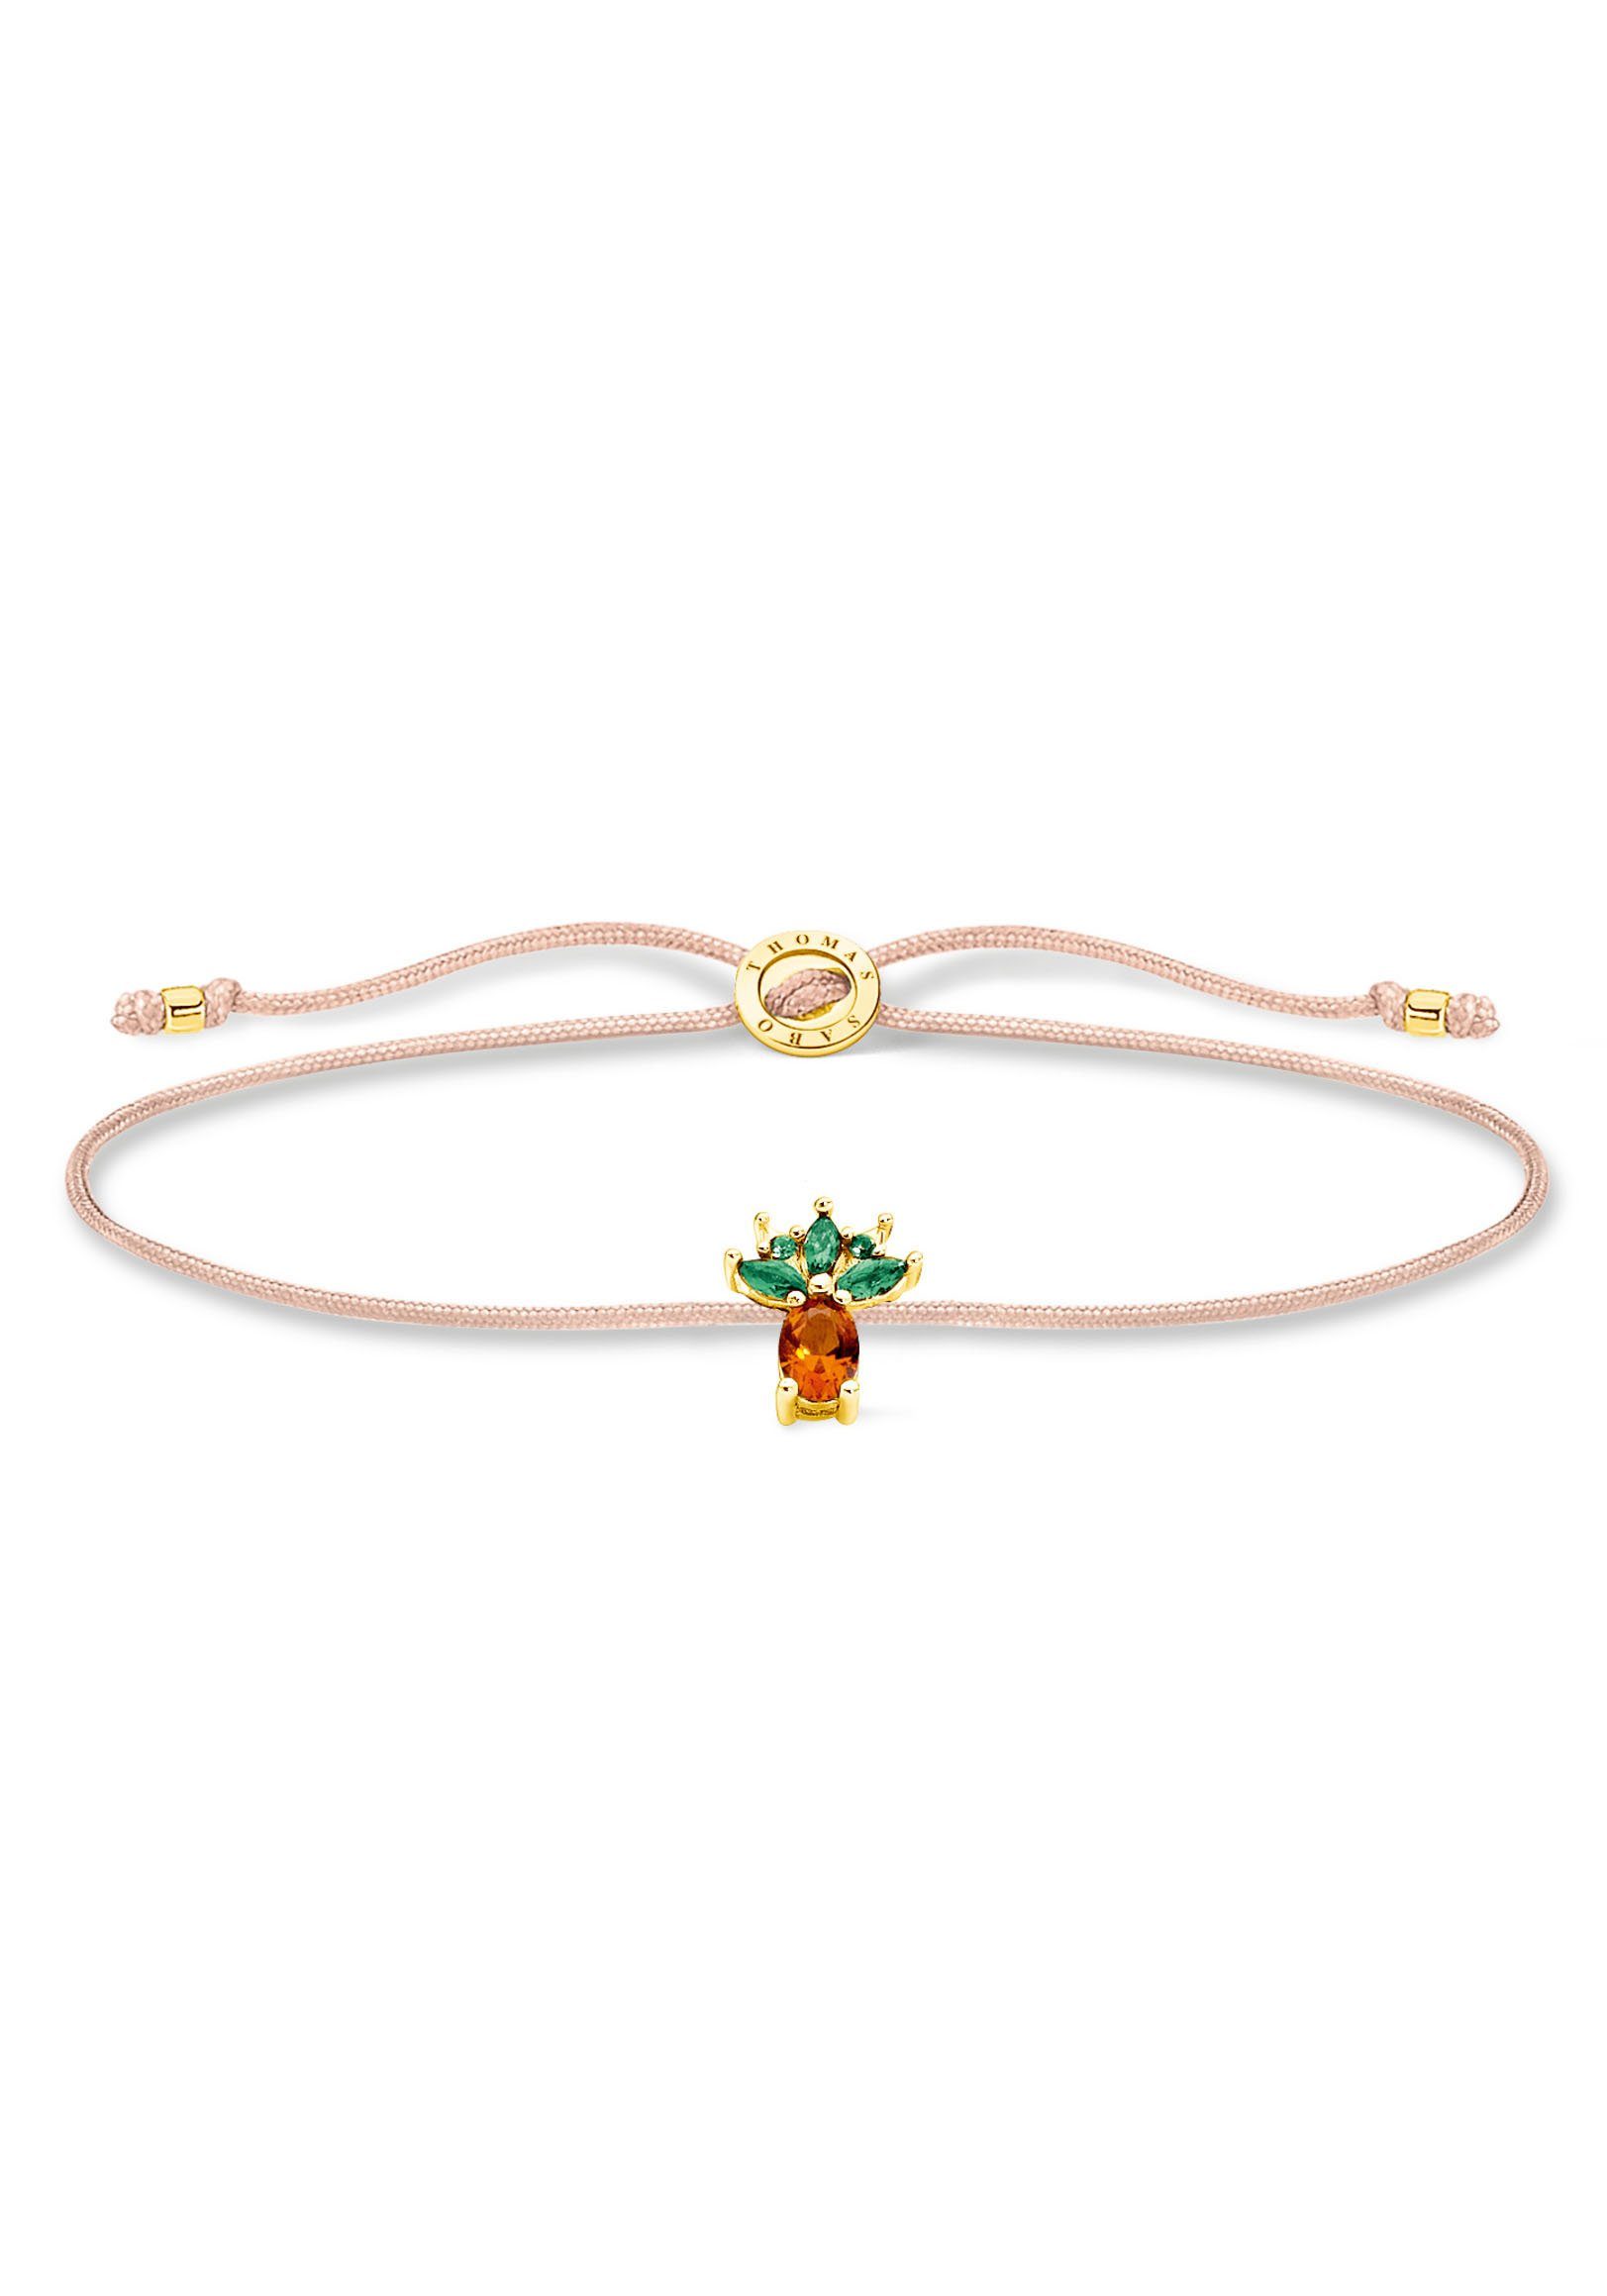 THOMAS SABO Armband »Little Secret Ananas gold, LS129-472-7-L20V«, mit  Glas-Keramik Stein online kaufen | OTTO